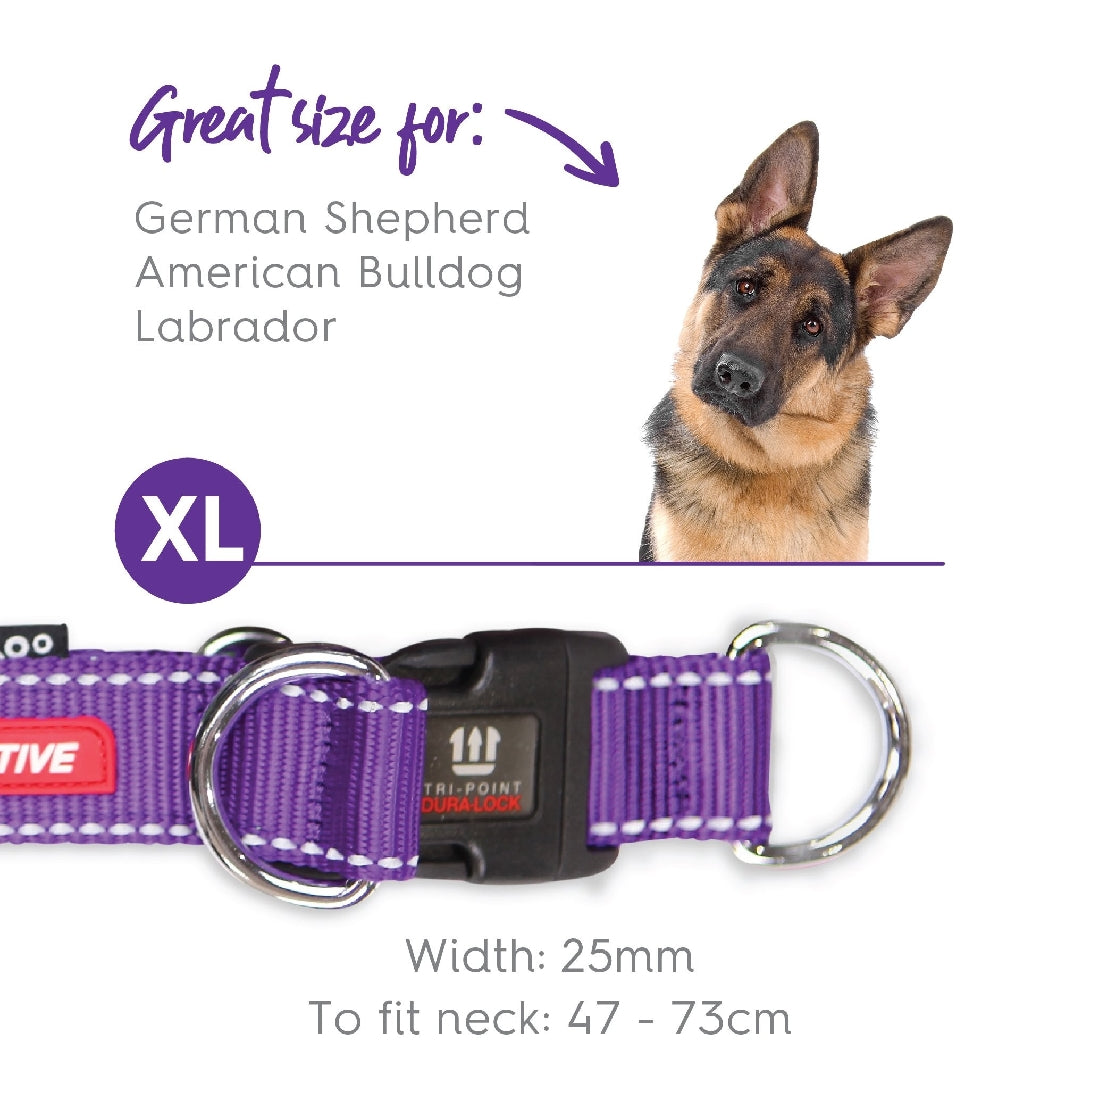 Kazoo Dog Collar Active Adjustable Purple & Lime-Ascot Saddlery-The Equestrian